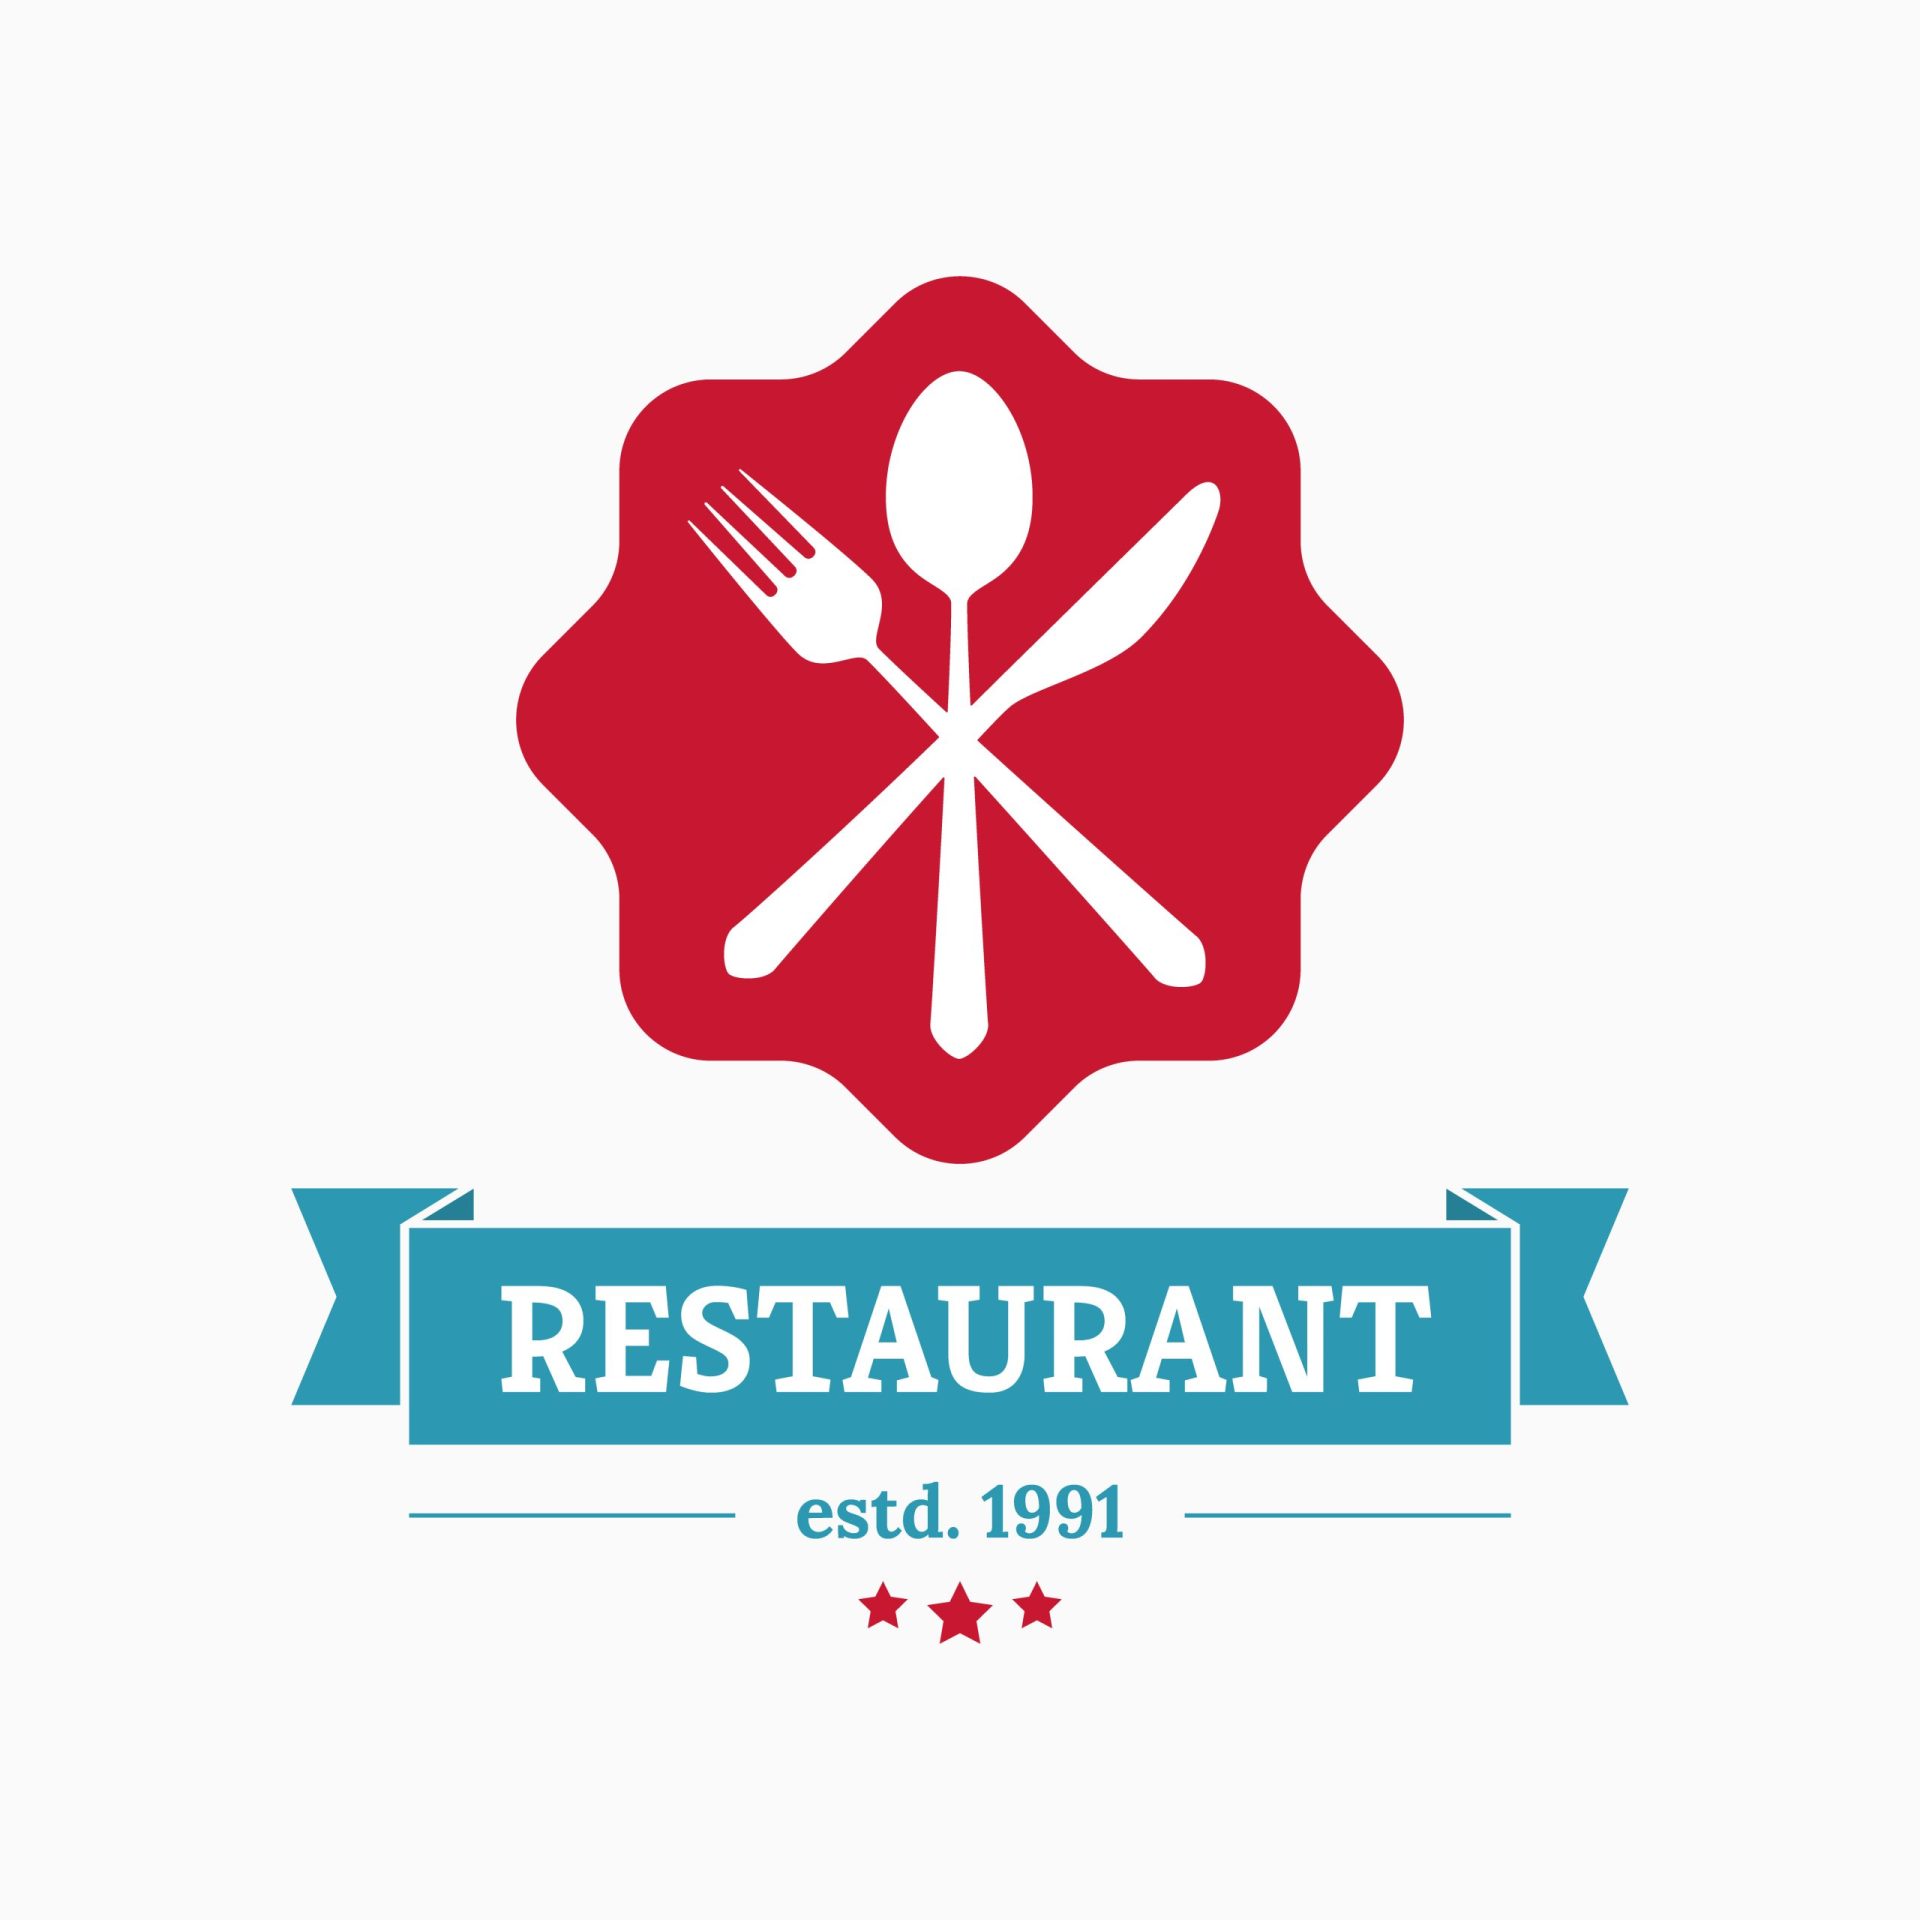 restaurants logo ideas 2